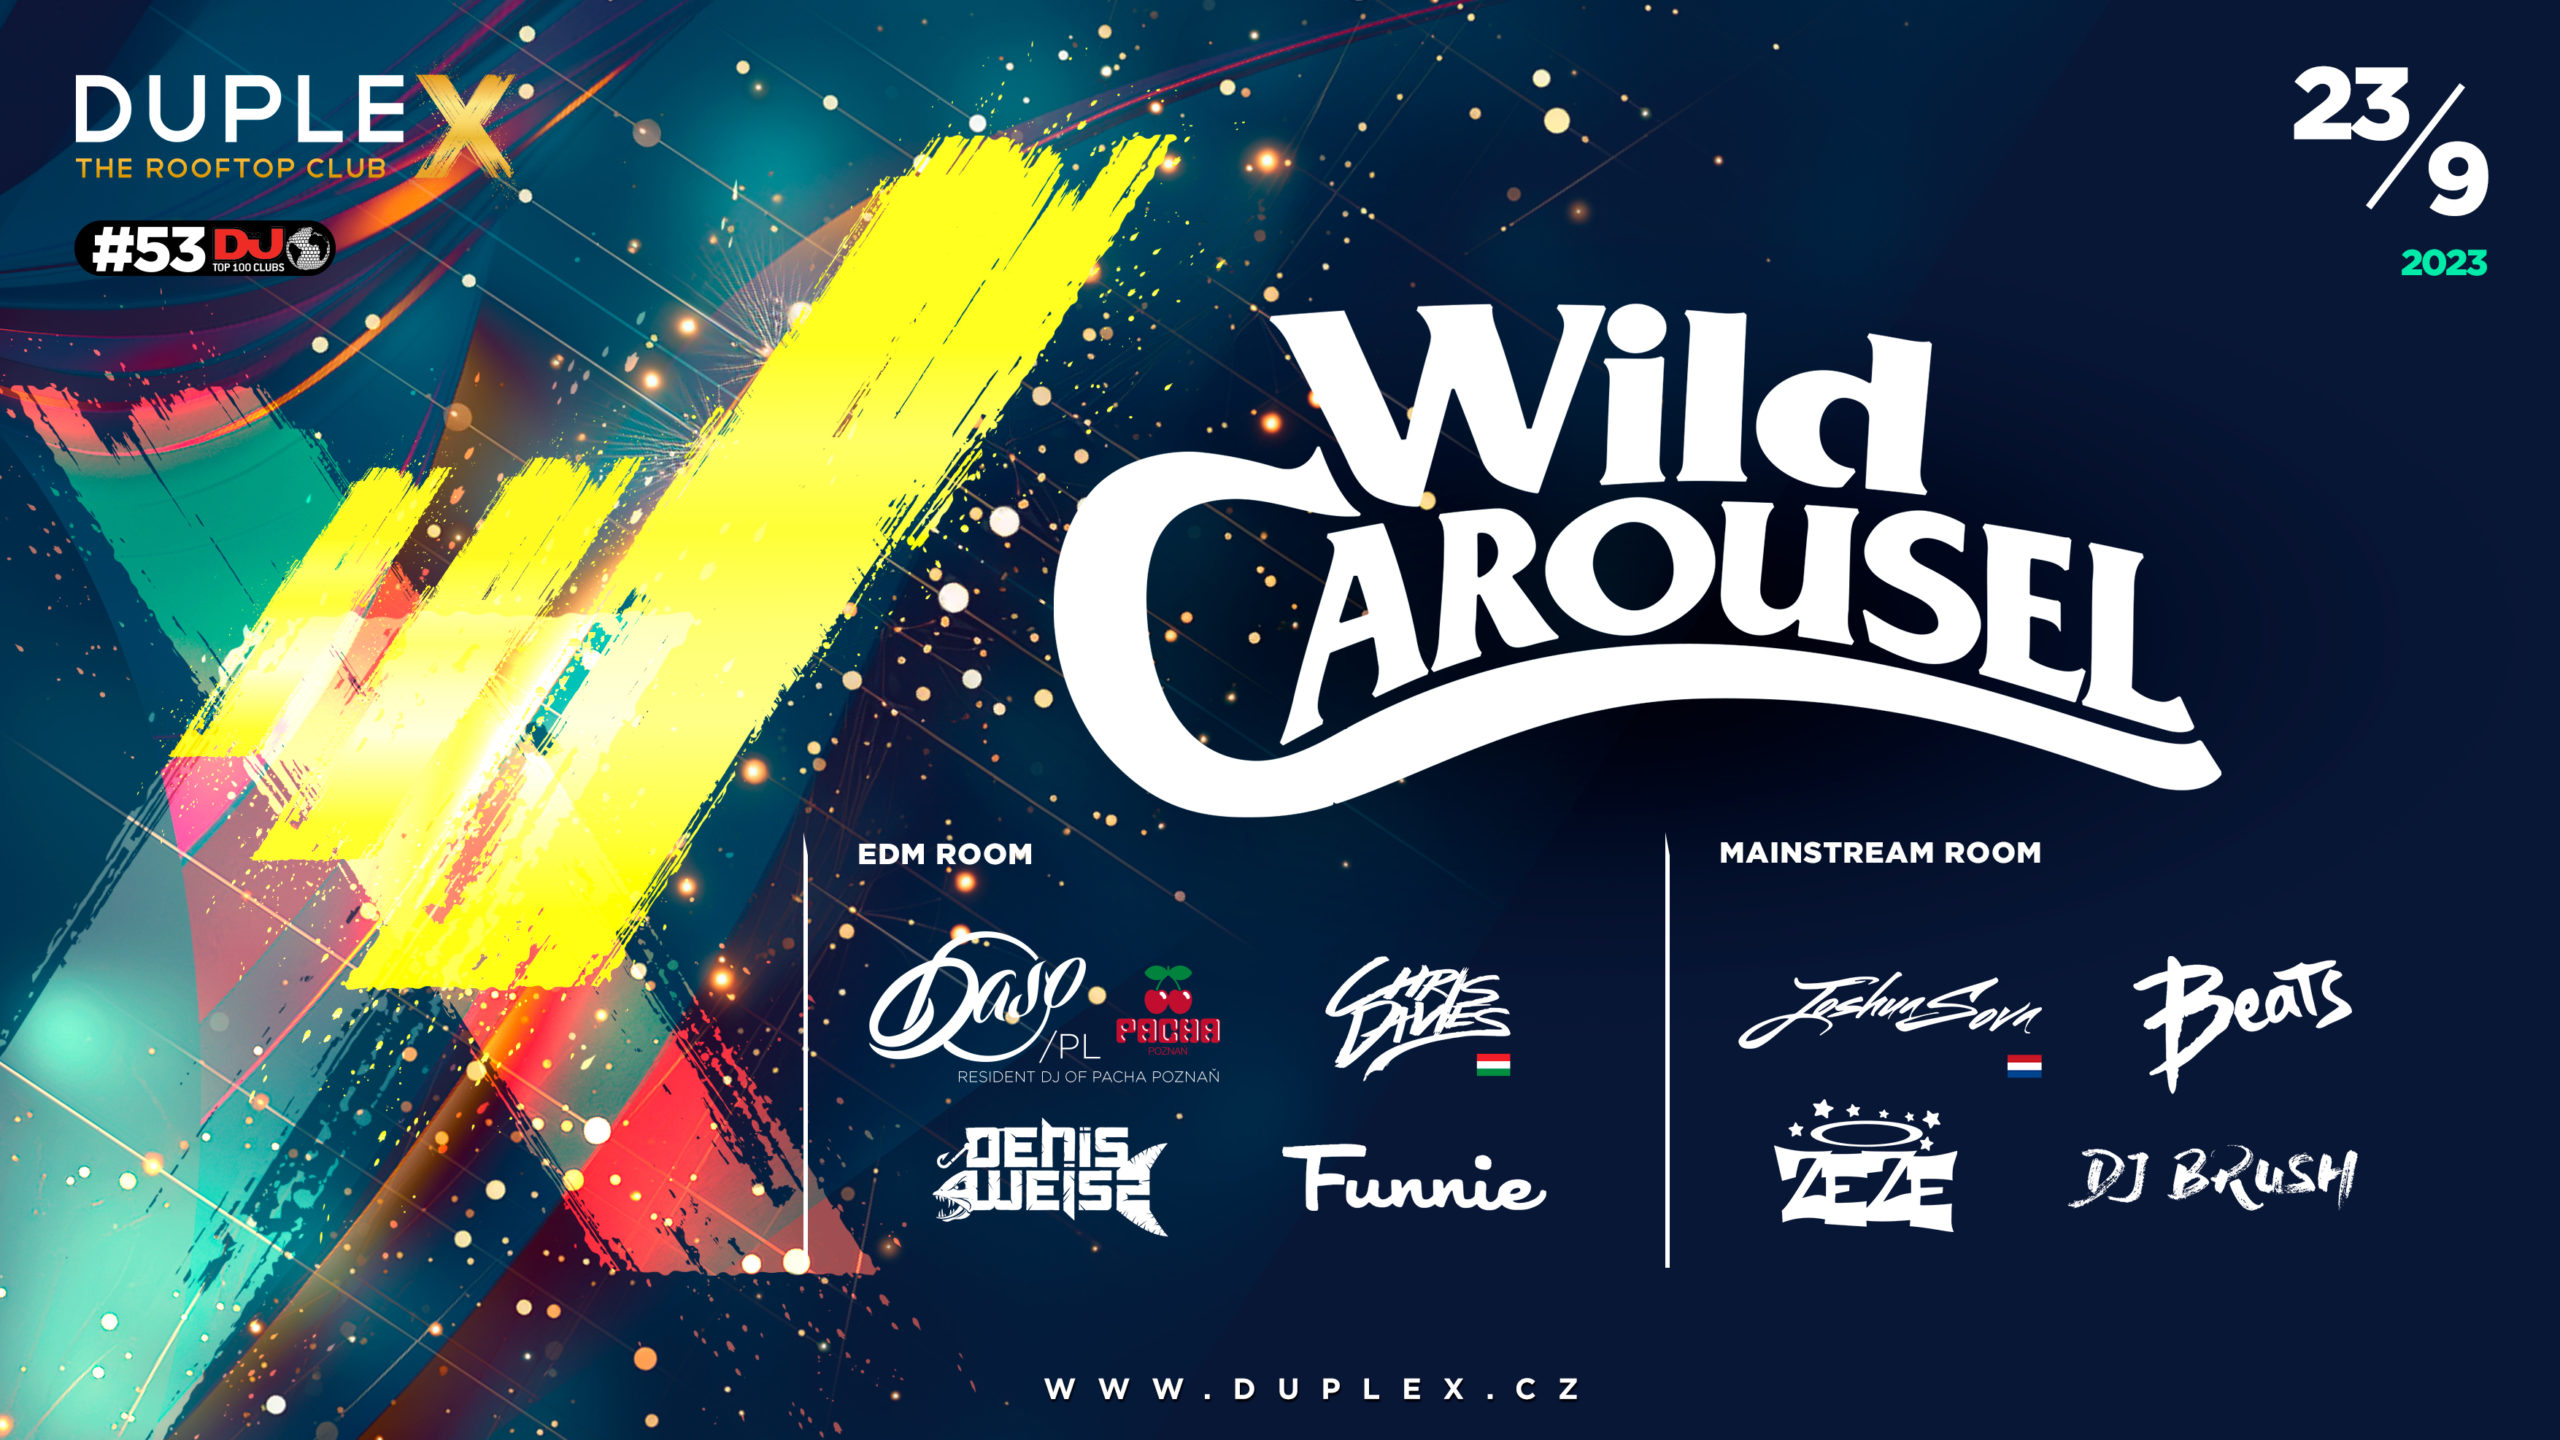 Wild Carousel - Saturday Party at DupleX